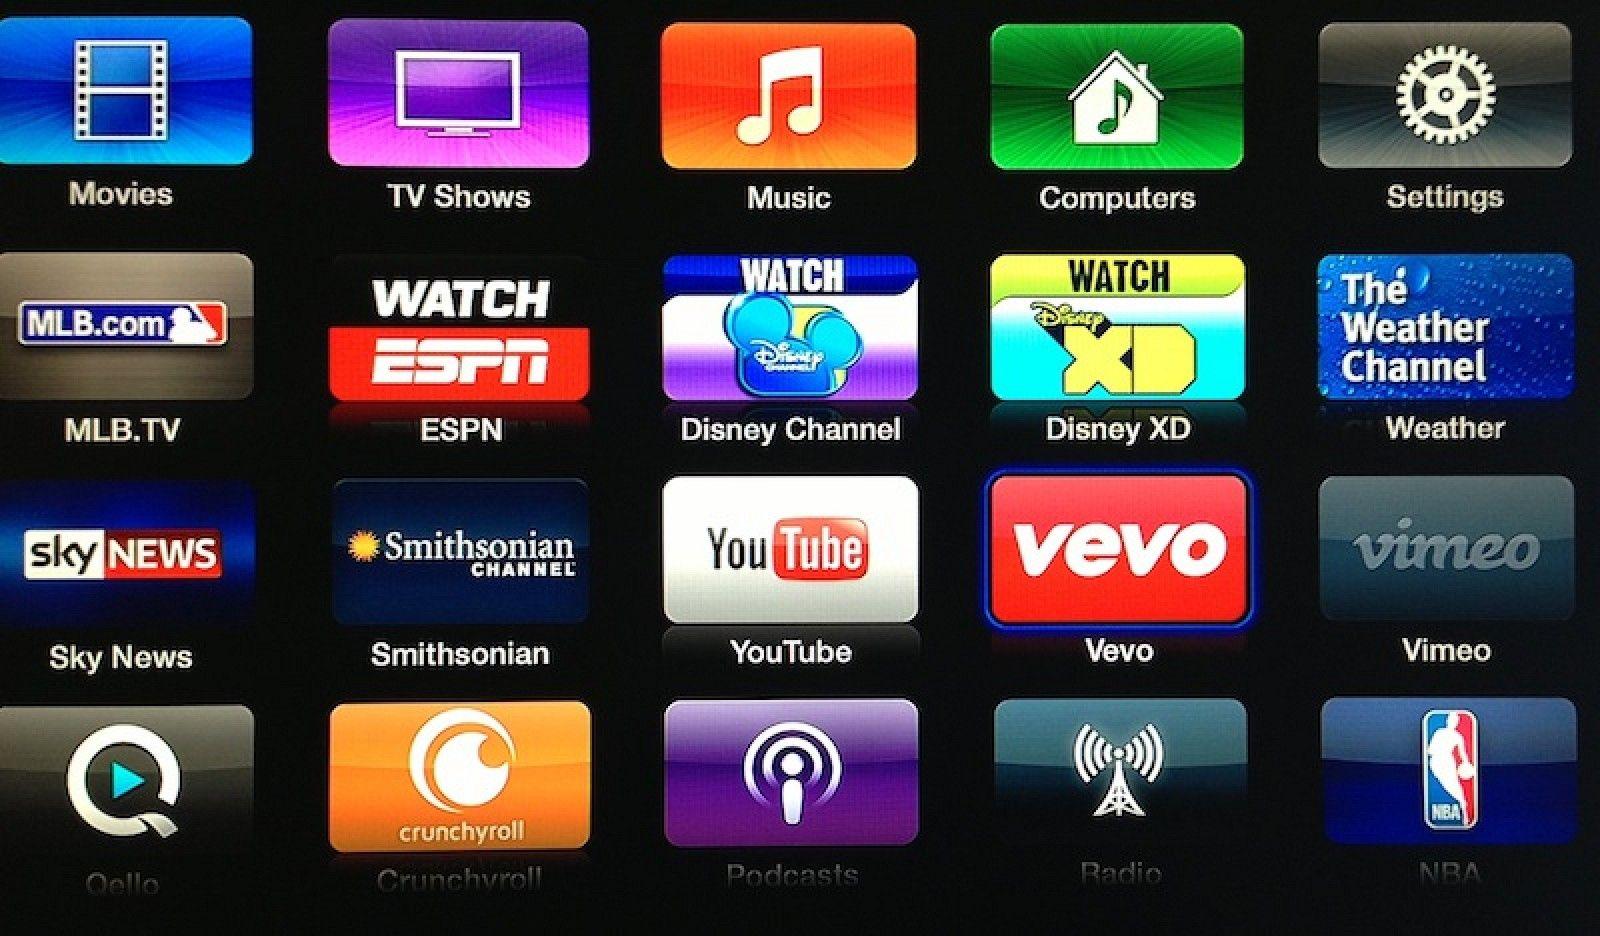 Disney Channel App Logo - Apple TV Adds Apps for Vevo, Weather Channel, Disney